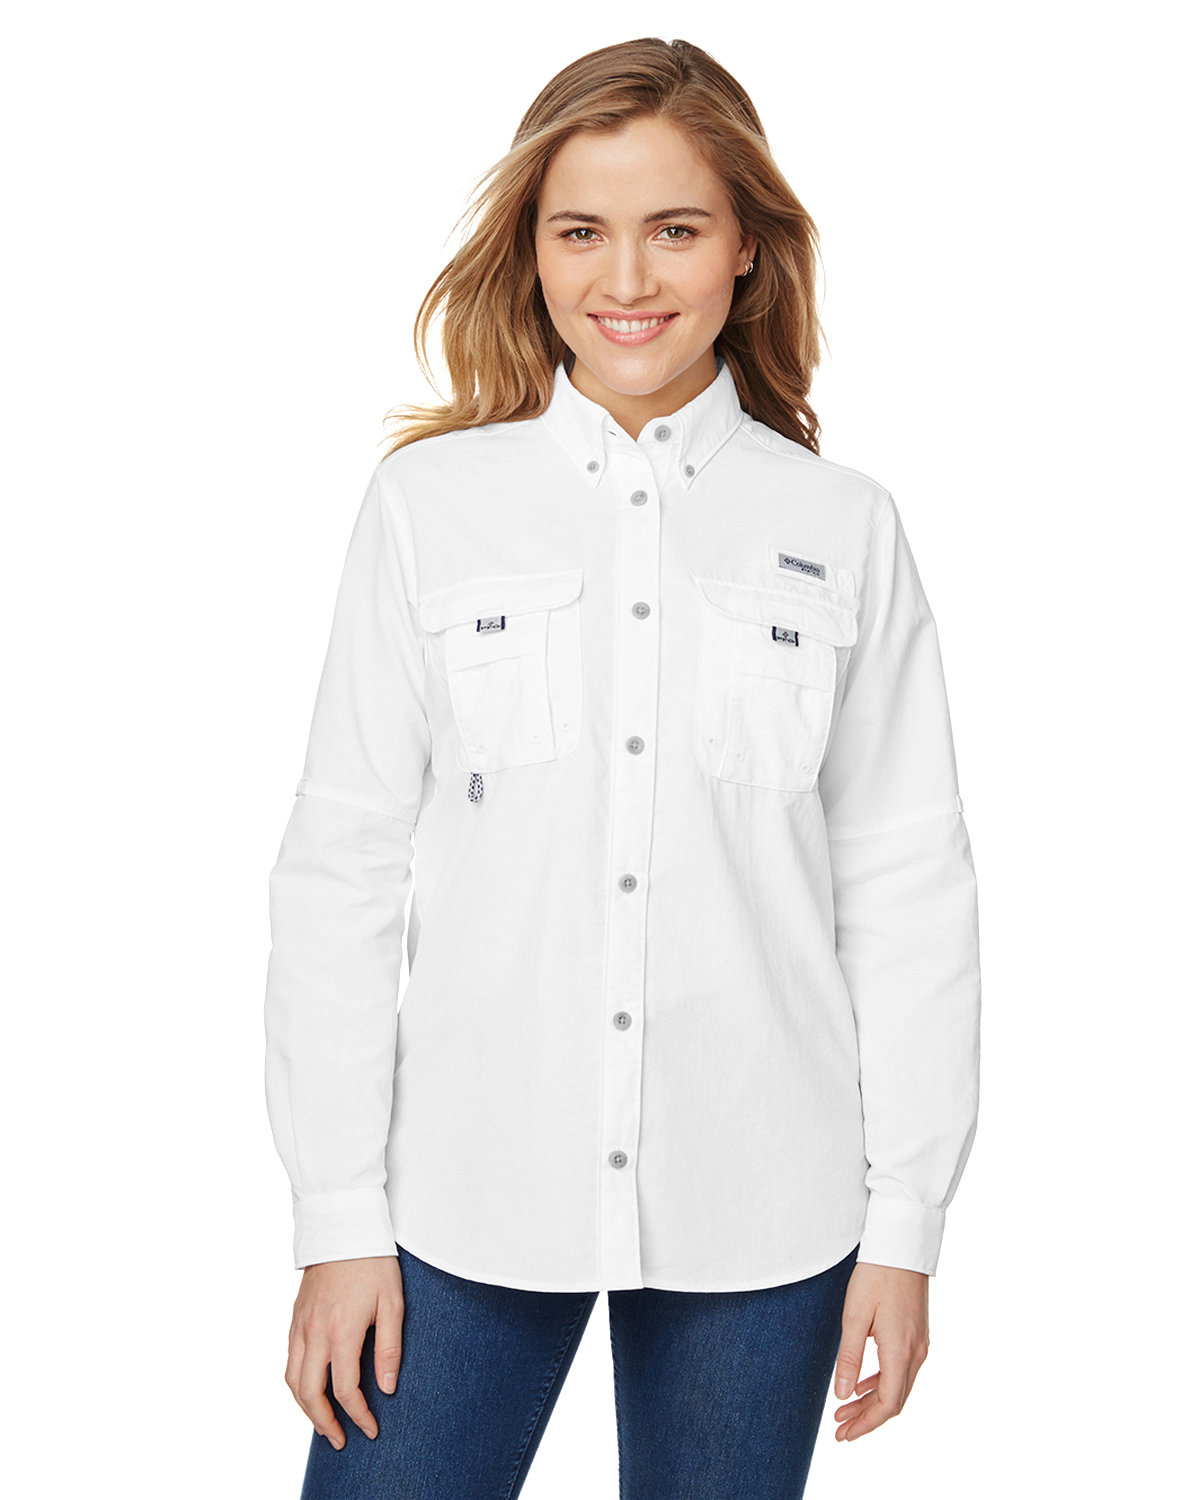 Buy Ladies Bahama™ Long-Sleeve Shirt - Columbia Online at Best price - NC